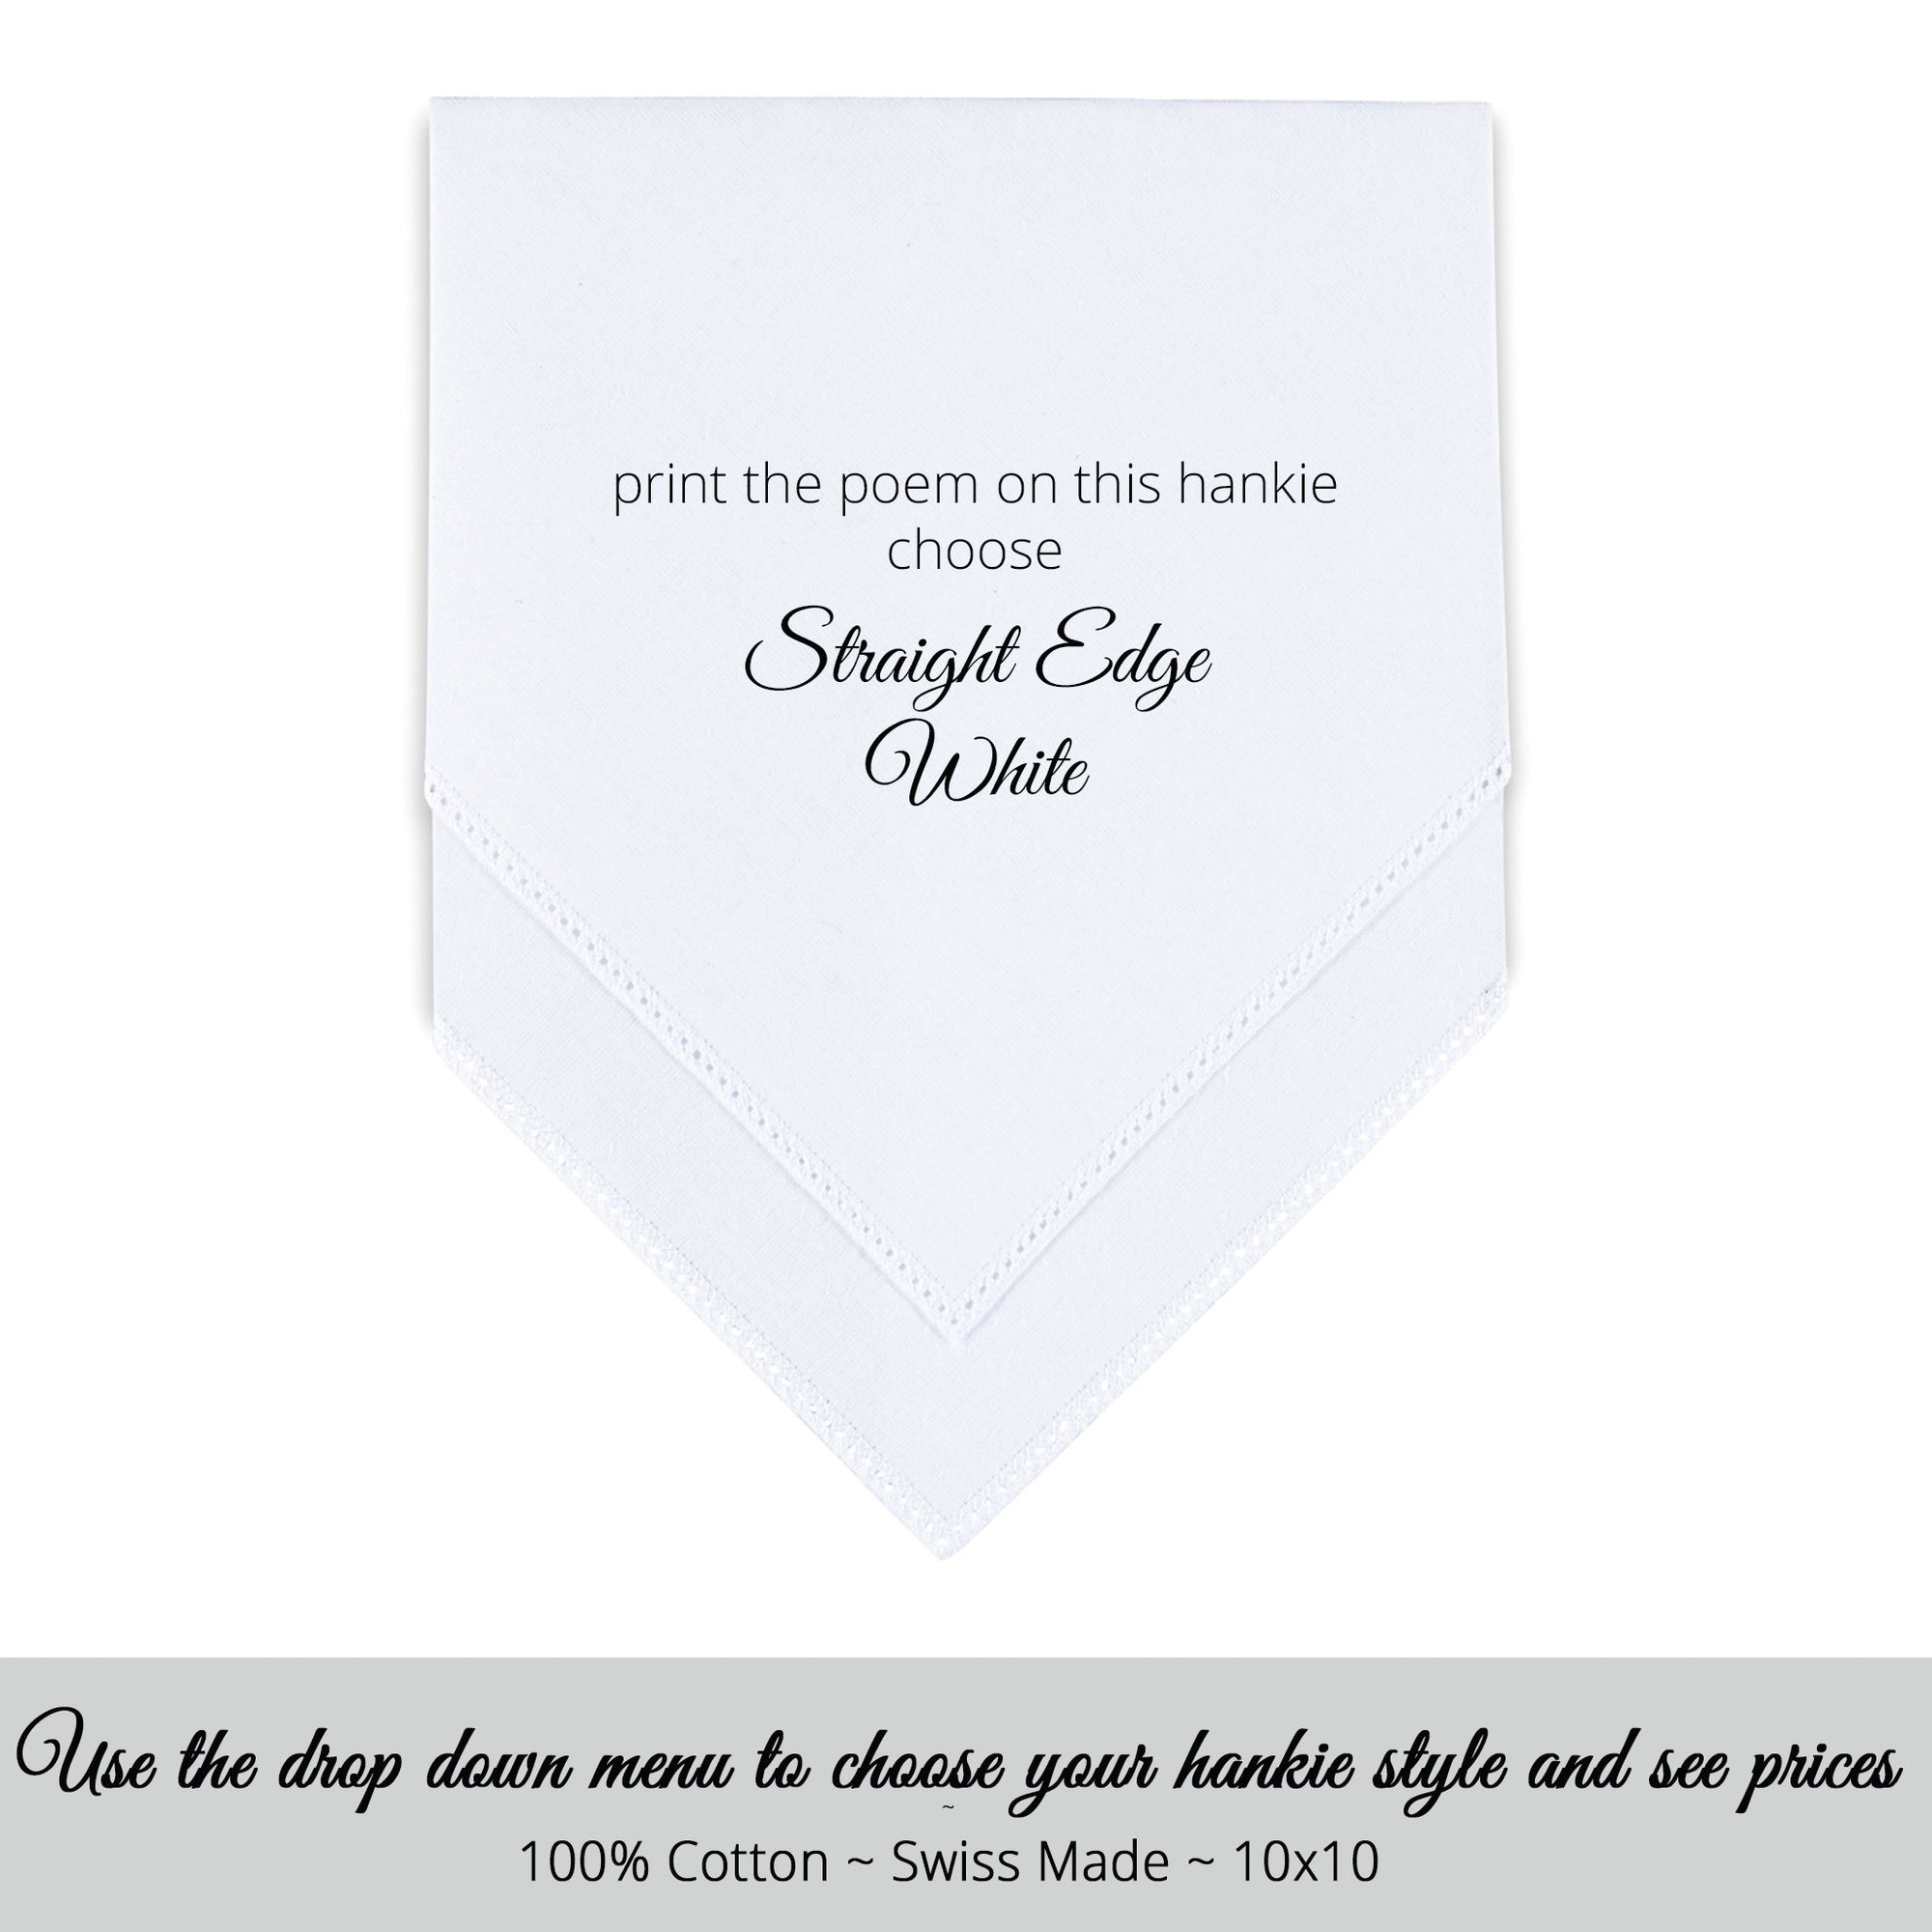 Wedding Handkerchief Scalloped edge white personalized poem for the bride